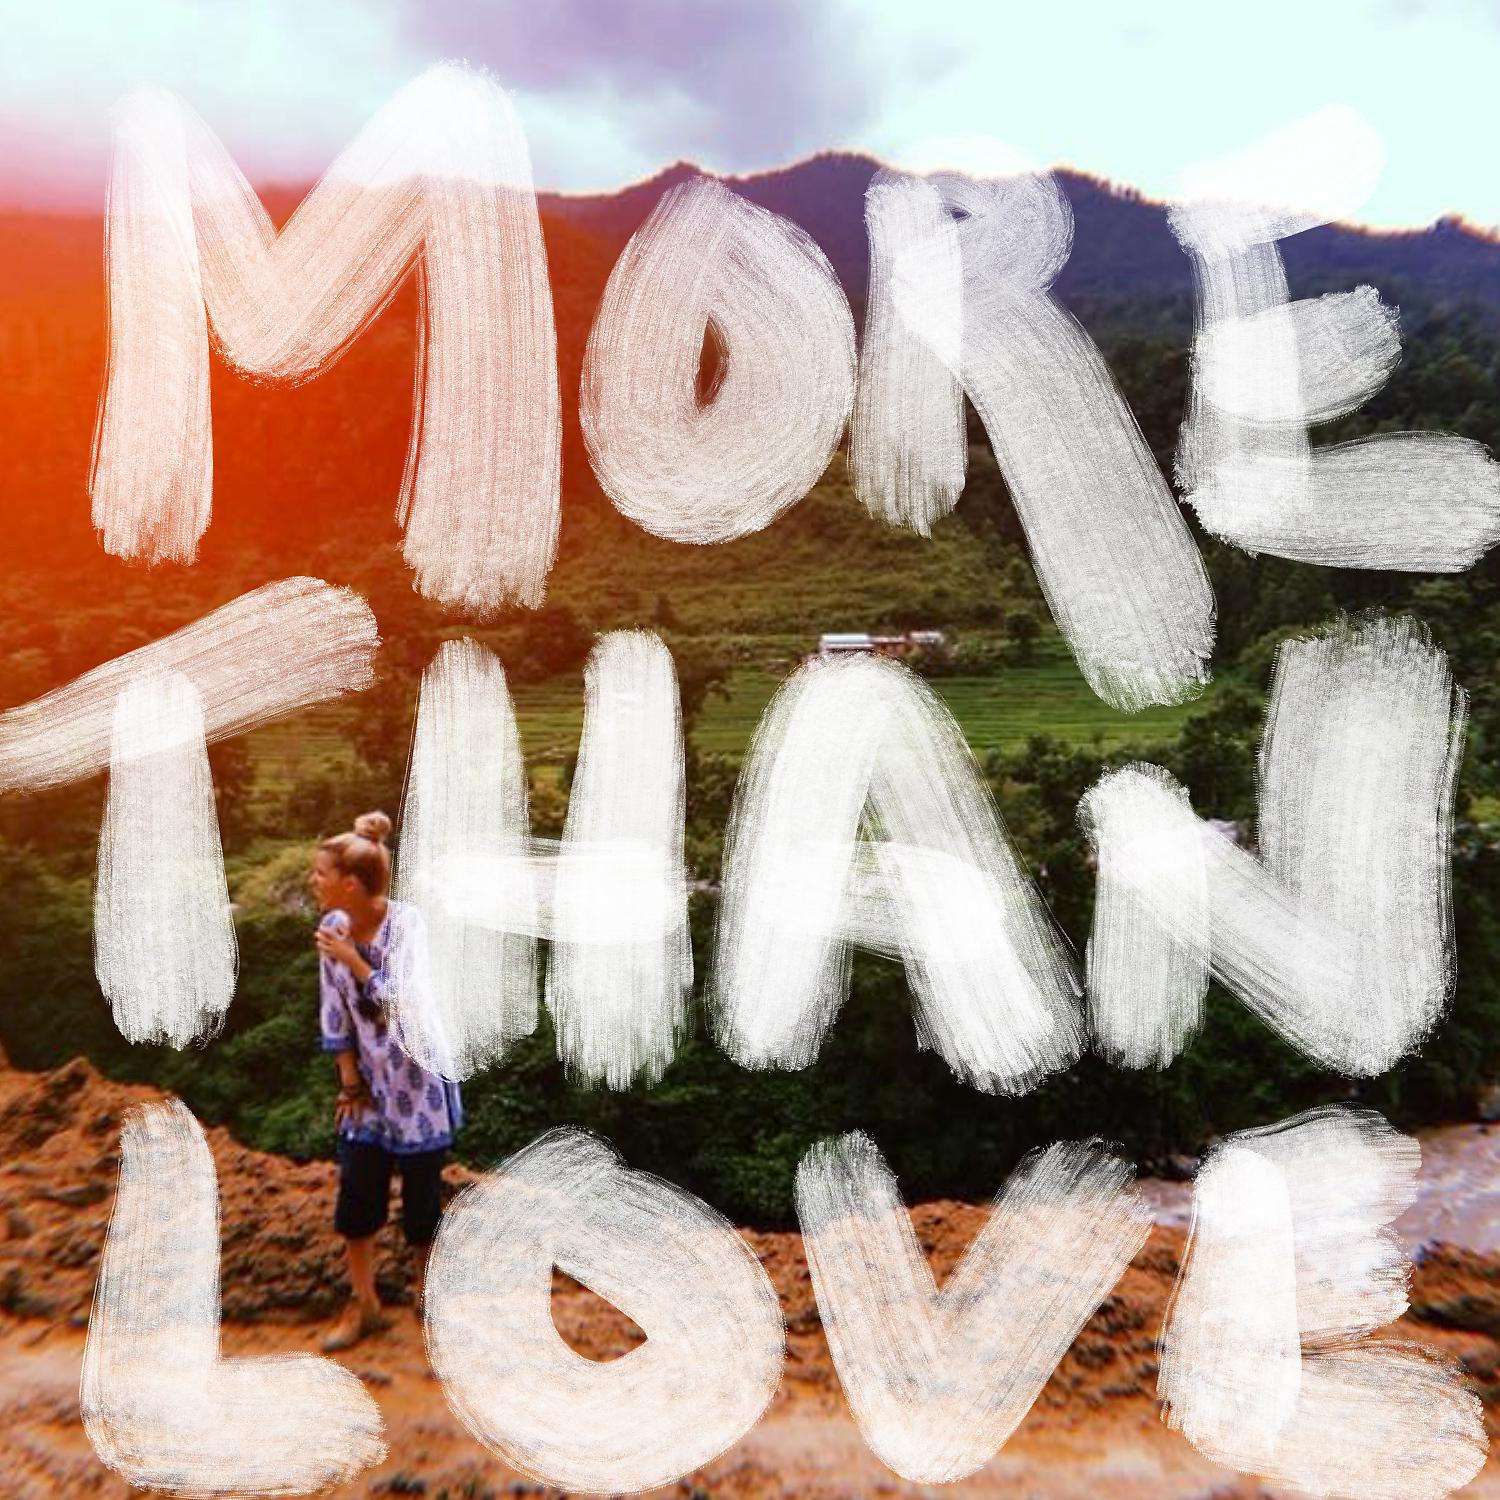 Постер альбома More Than Love